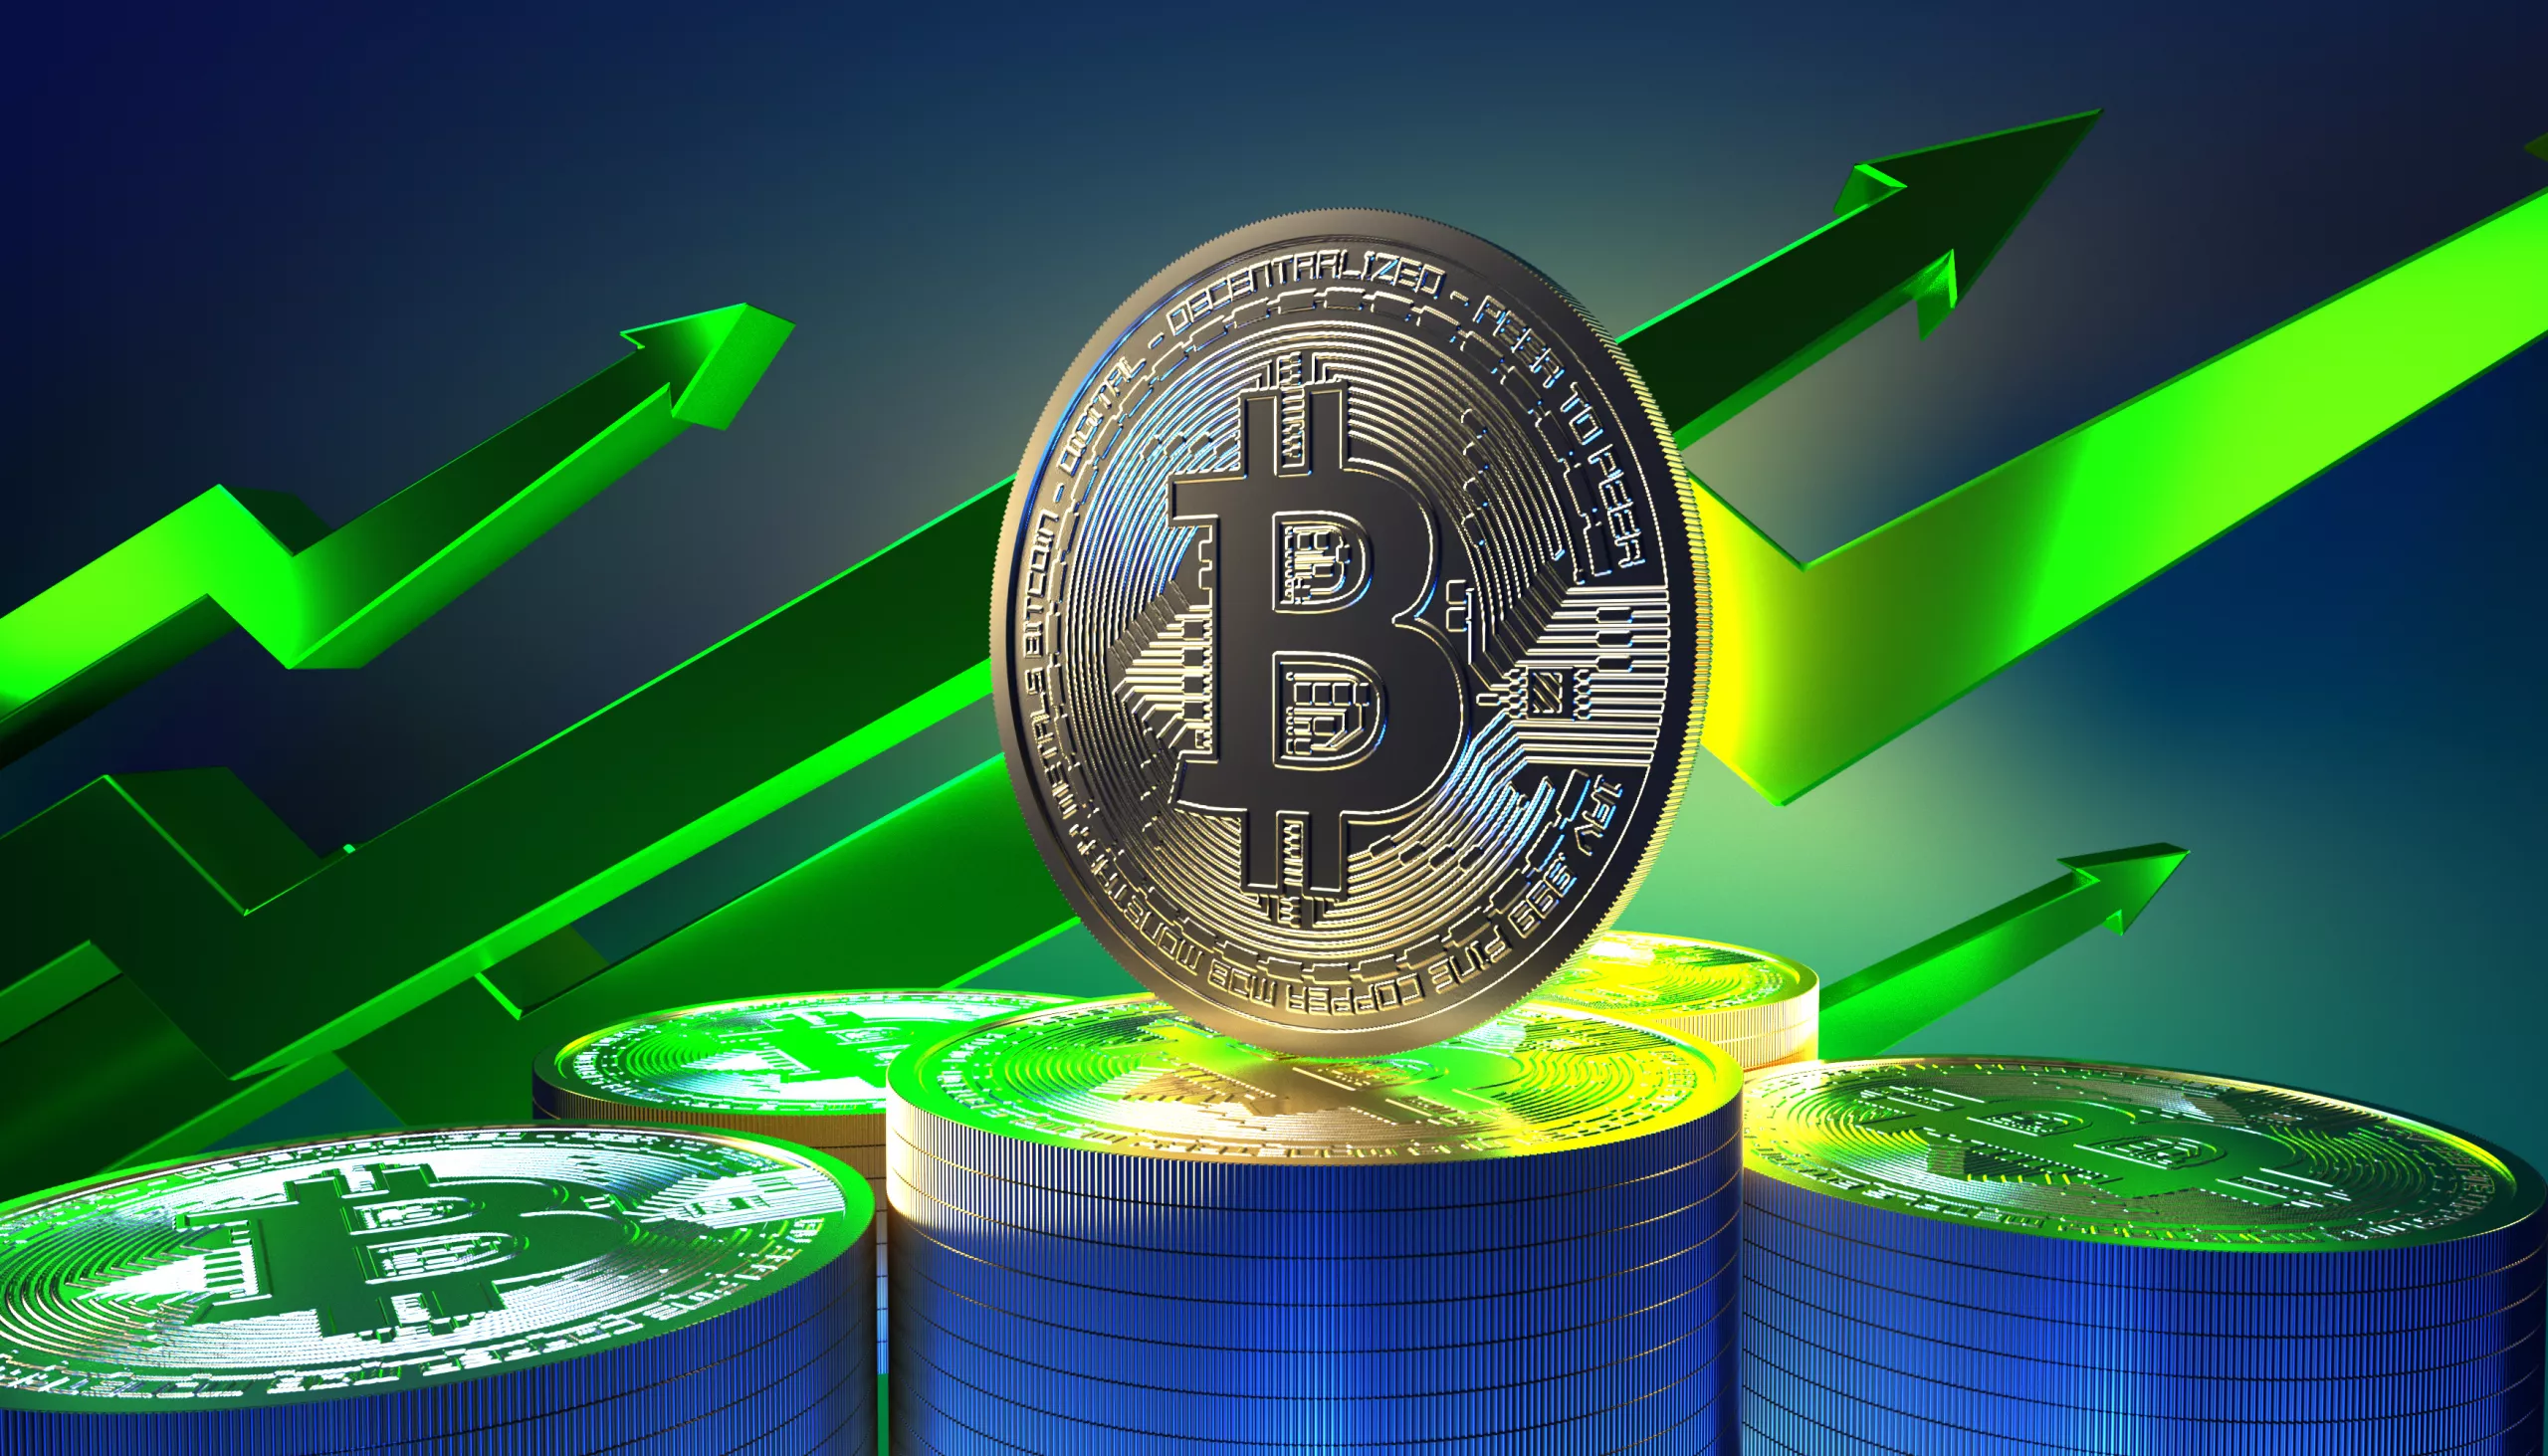 bitcoin btc up price green arrows